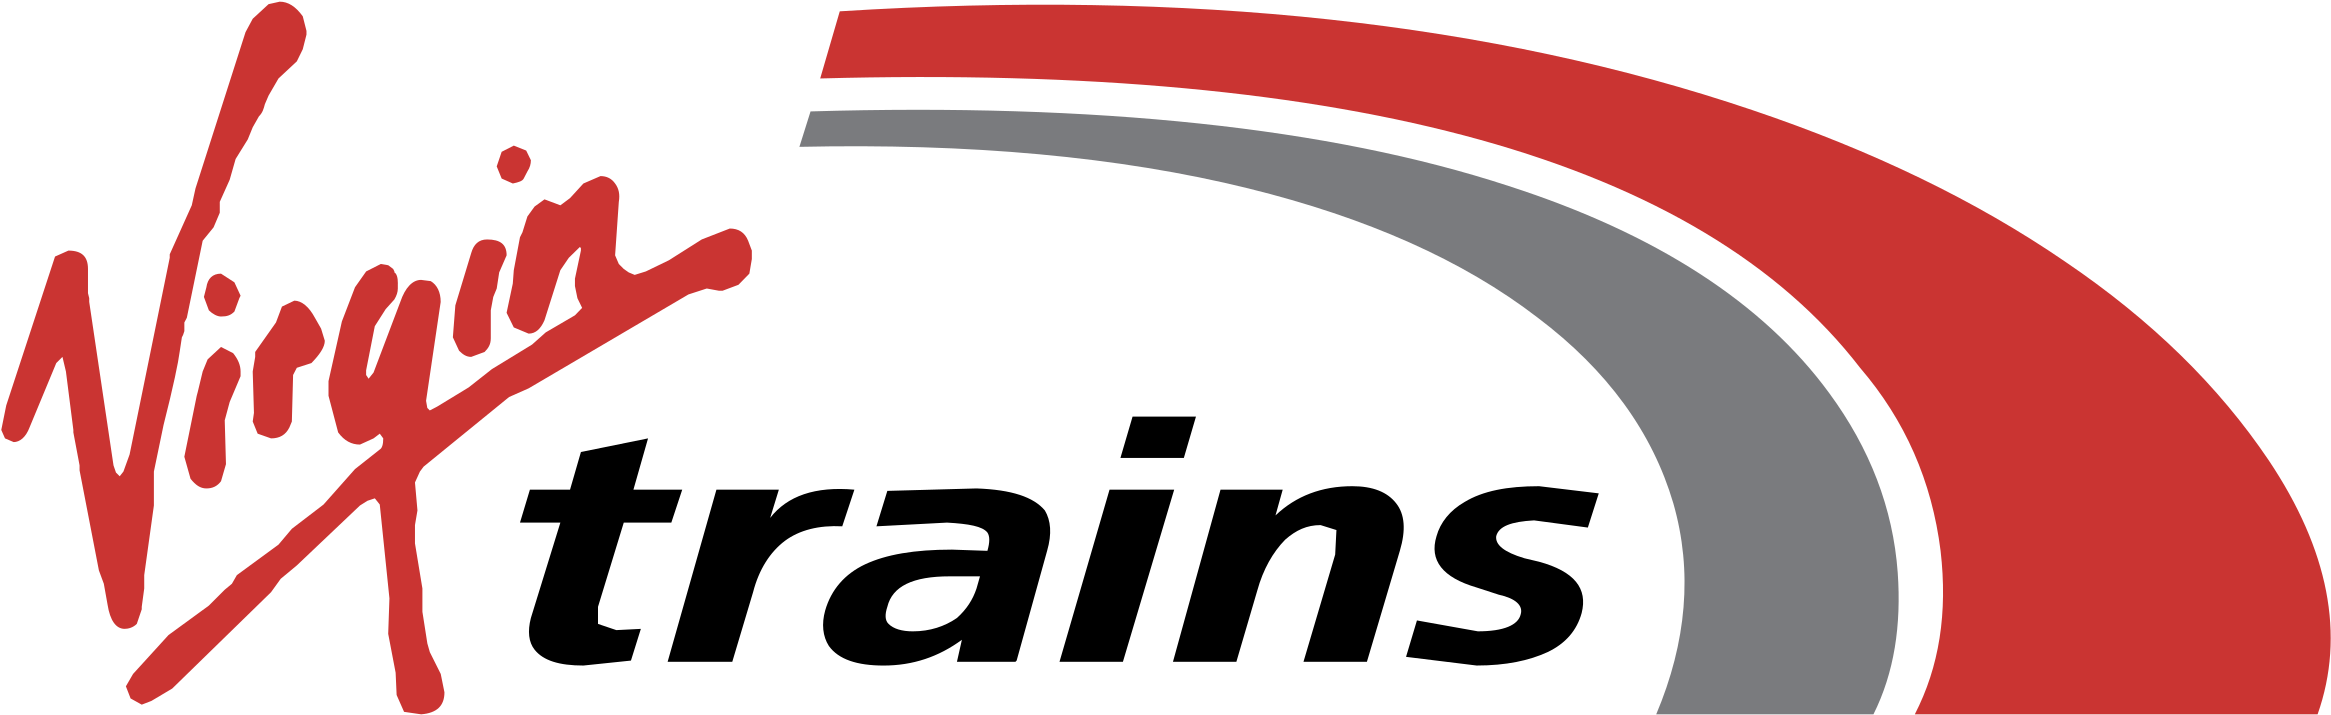 Virgin Trains Logo Black And White - Virgin Trains Logo Png (2400x2400)